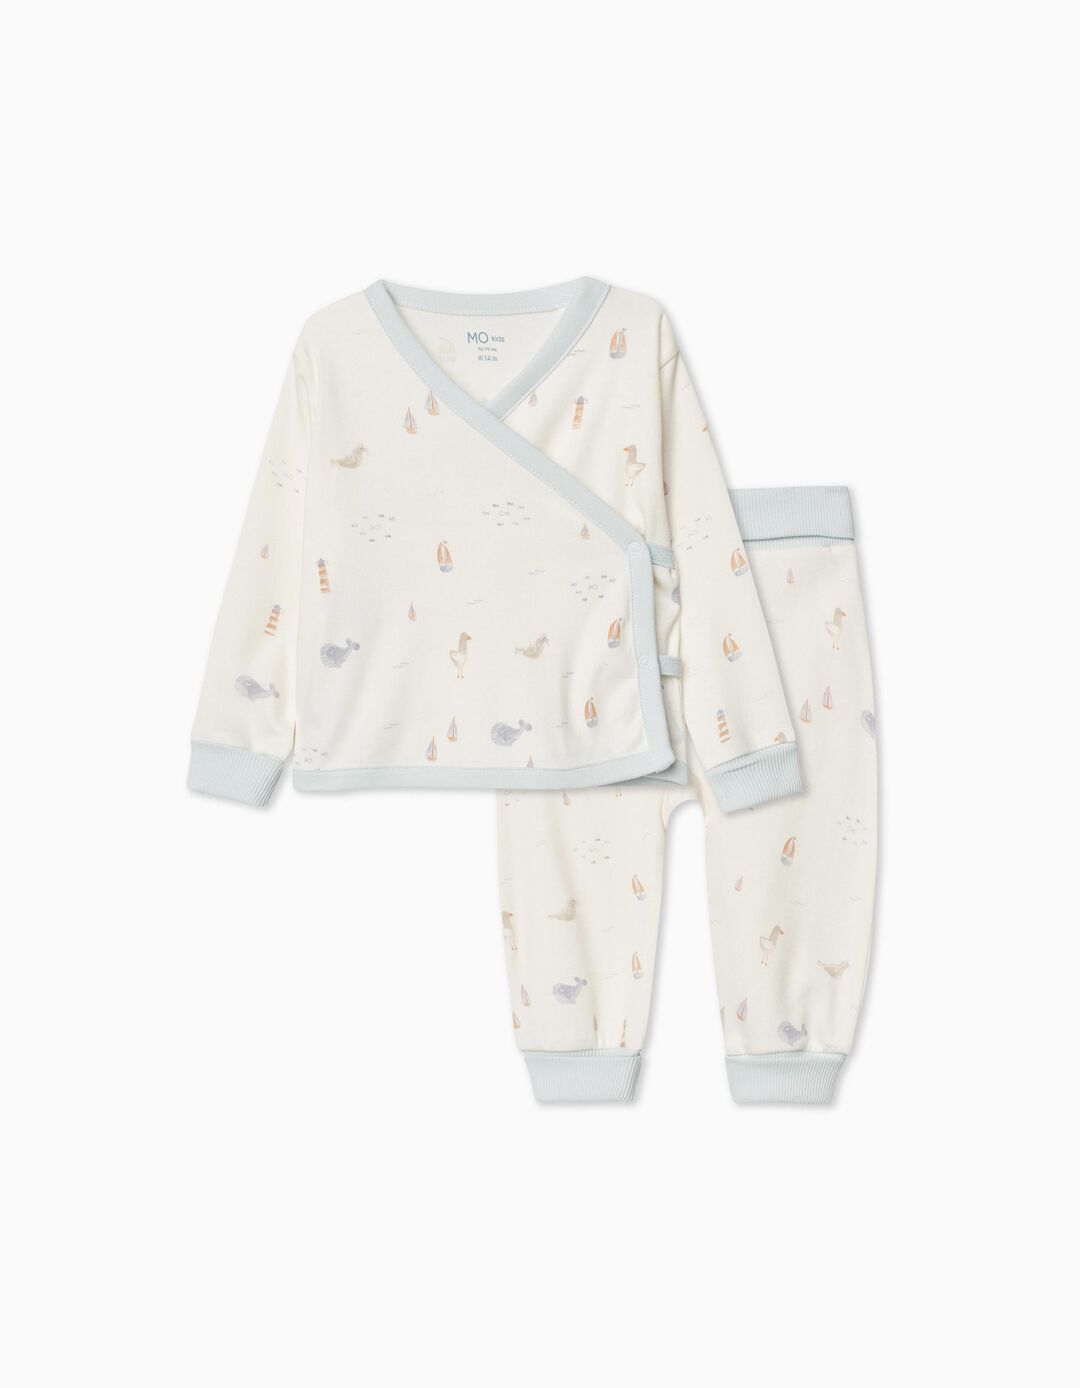 Printed Pajamas, Baby Boy, Multiple colors